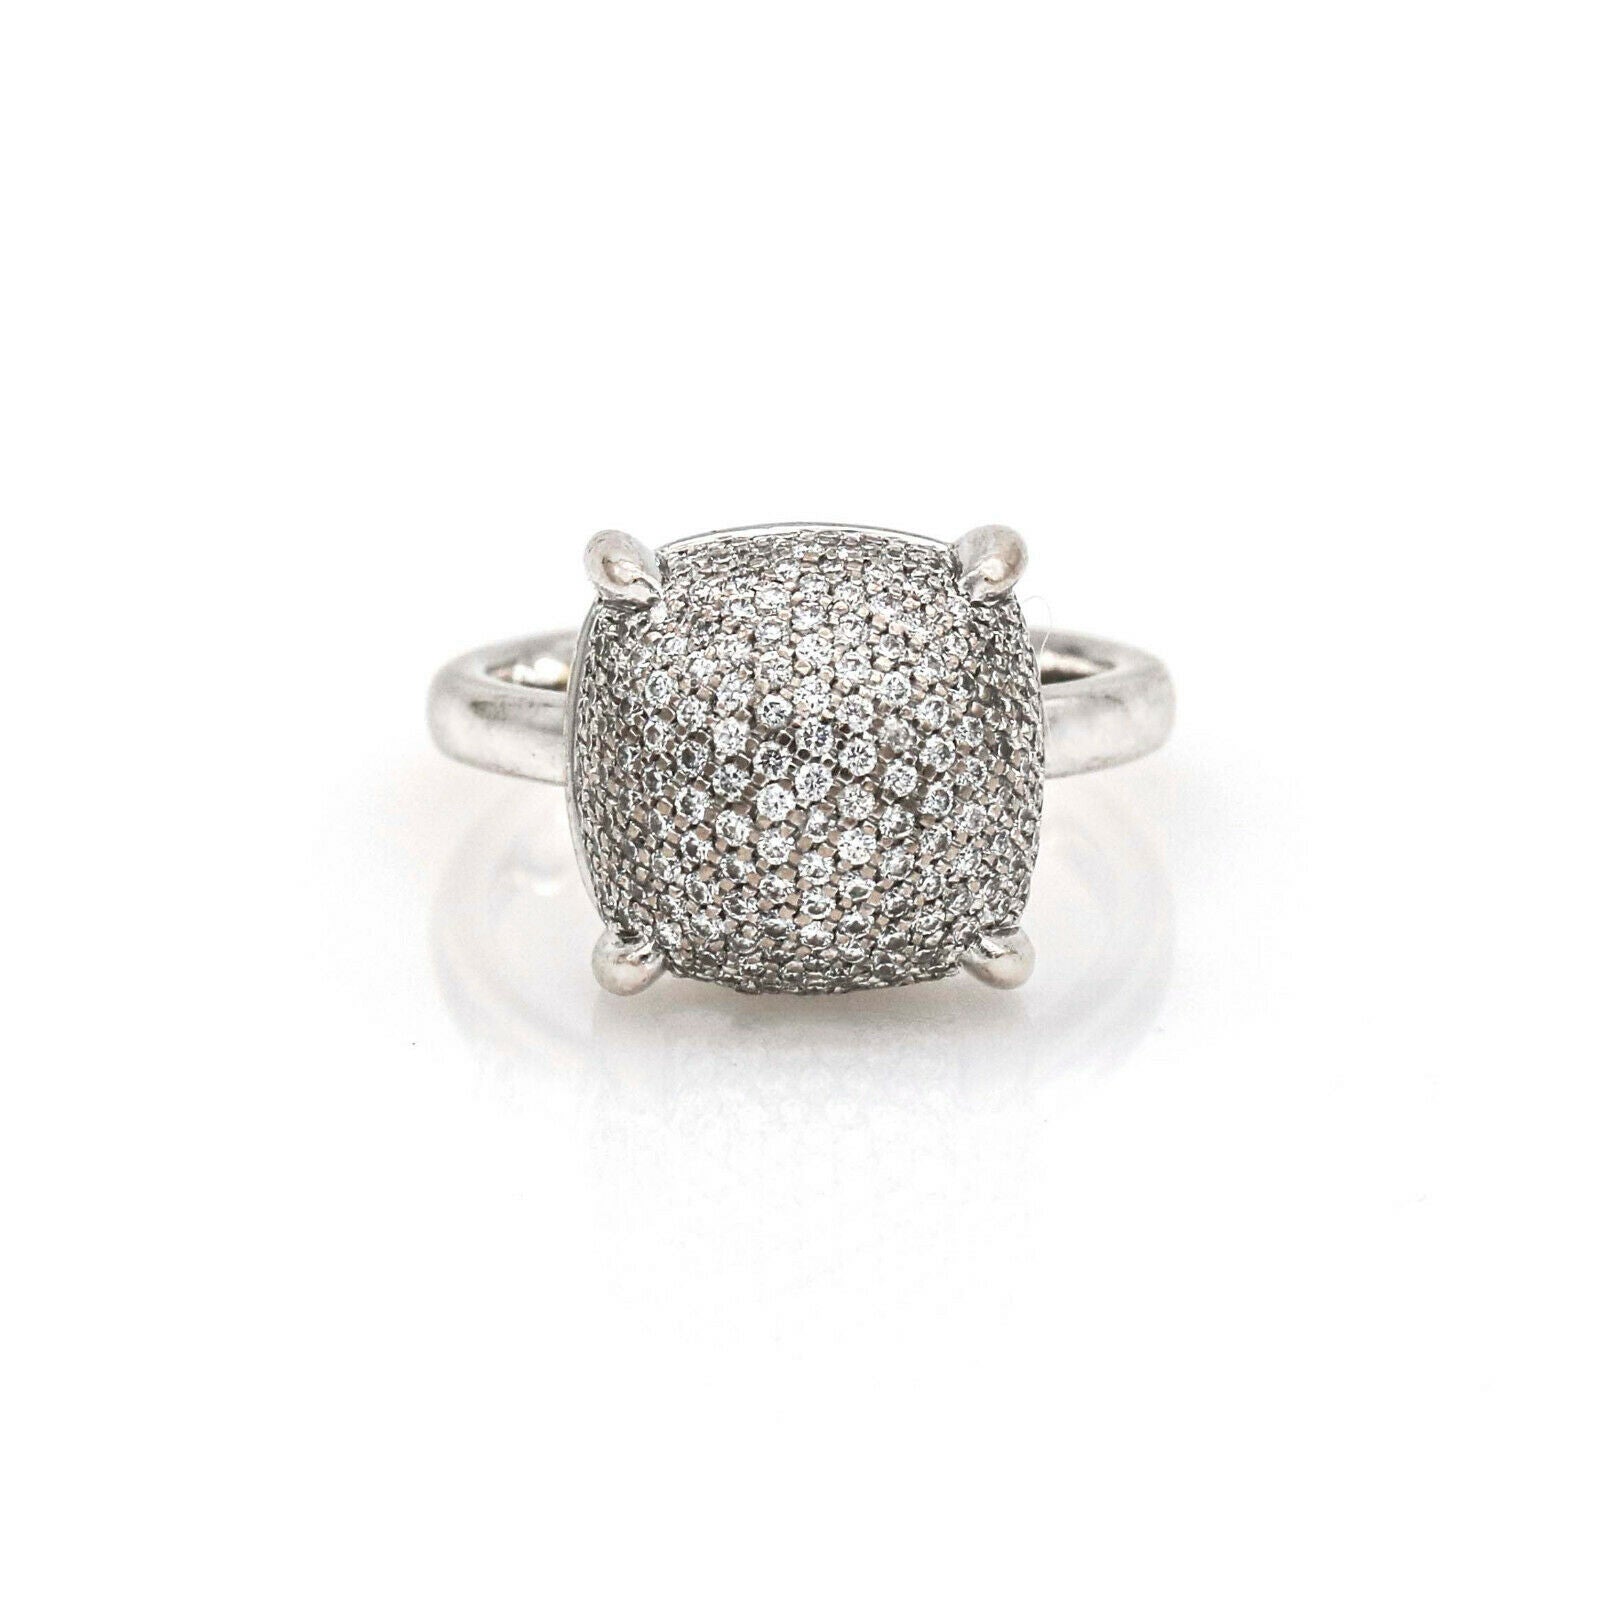 Tiffany & Co. Paloma Picasso Diamond Sugar Stacks Ring in 18k White Gold